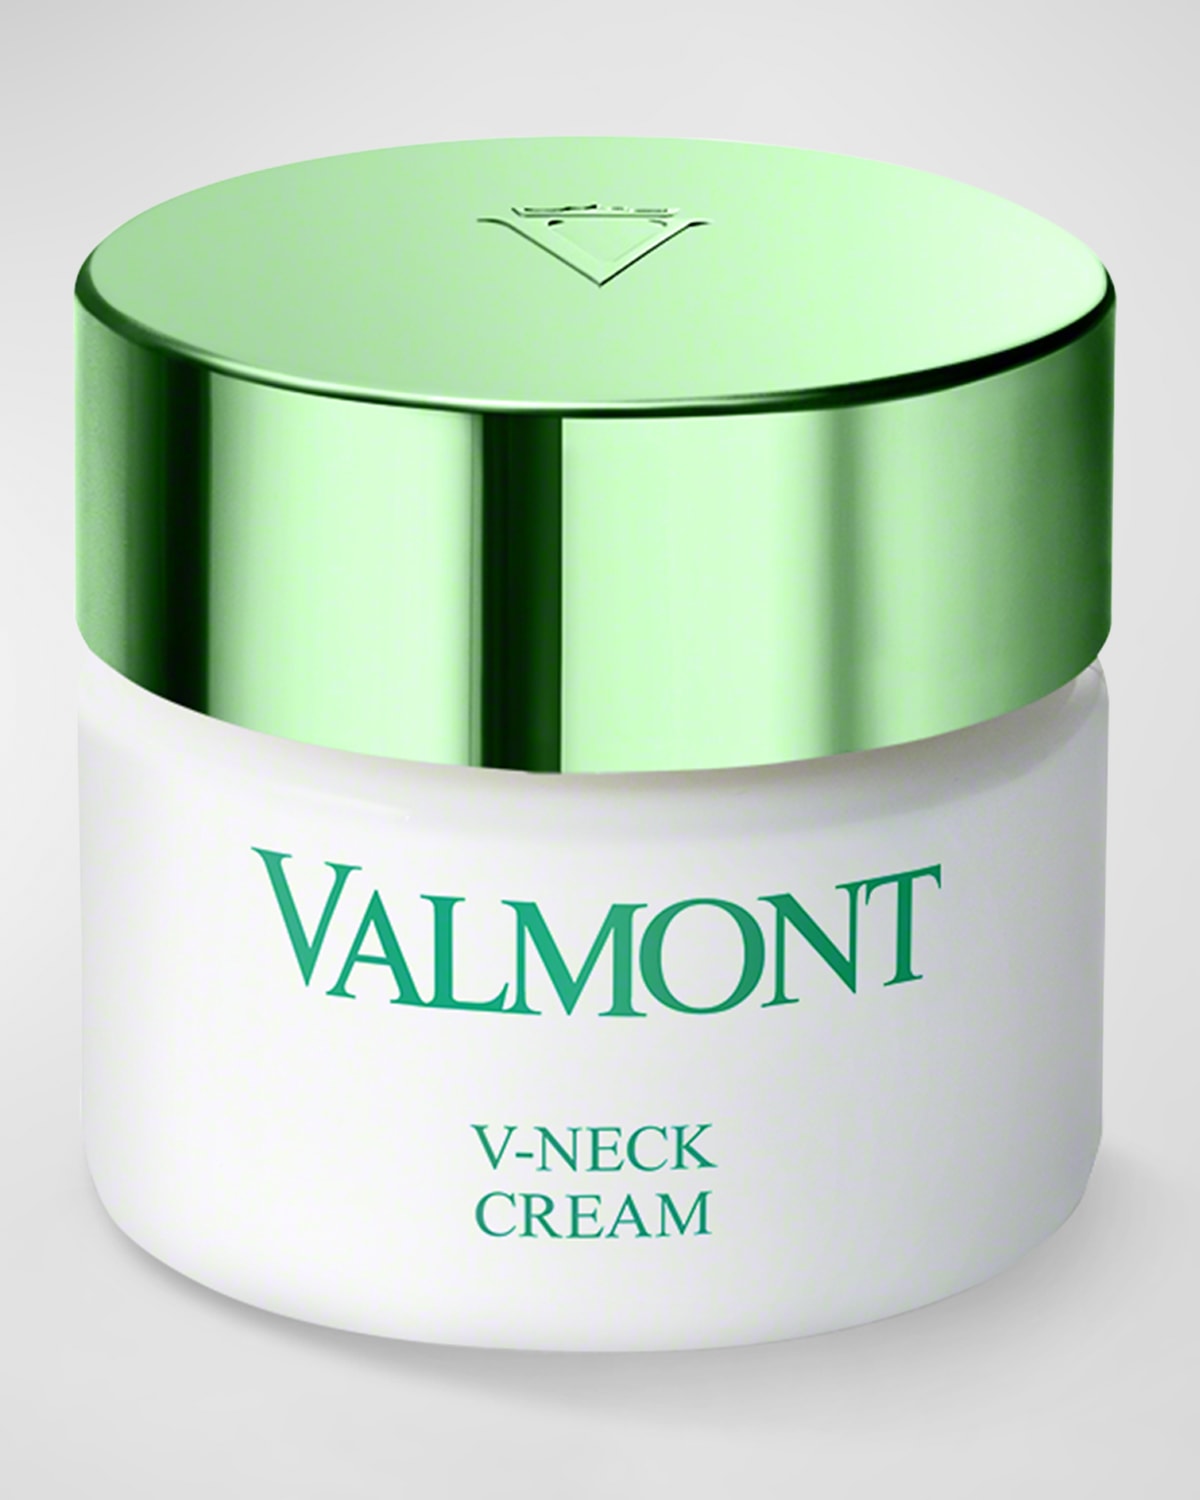 V-Neck Cream, 1.7 oz.